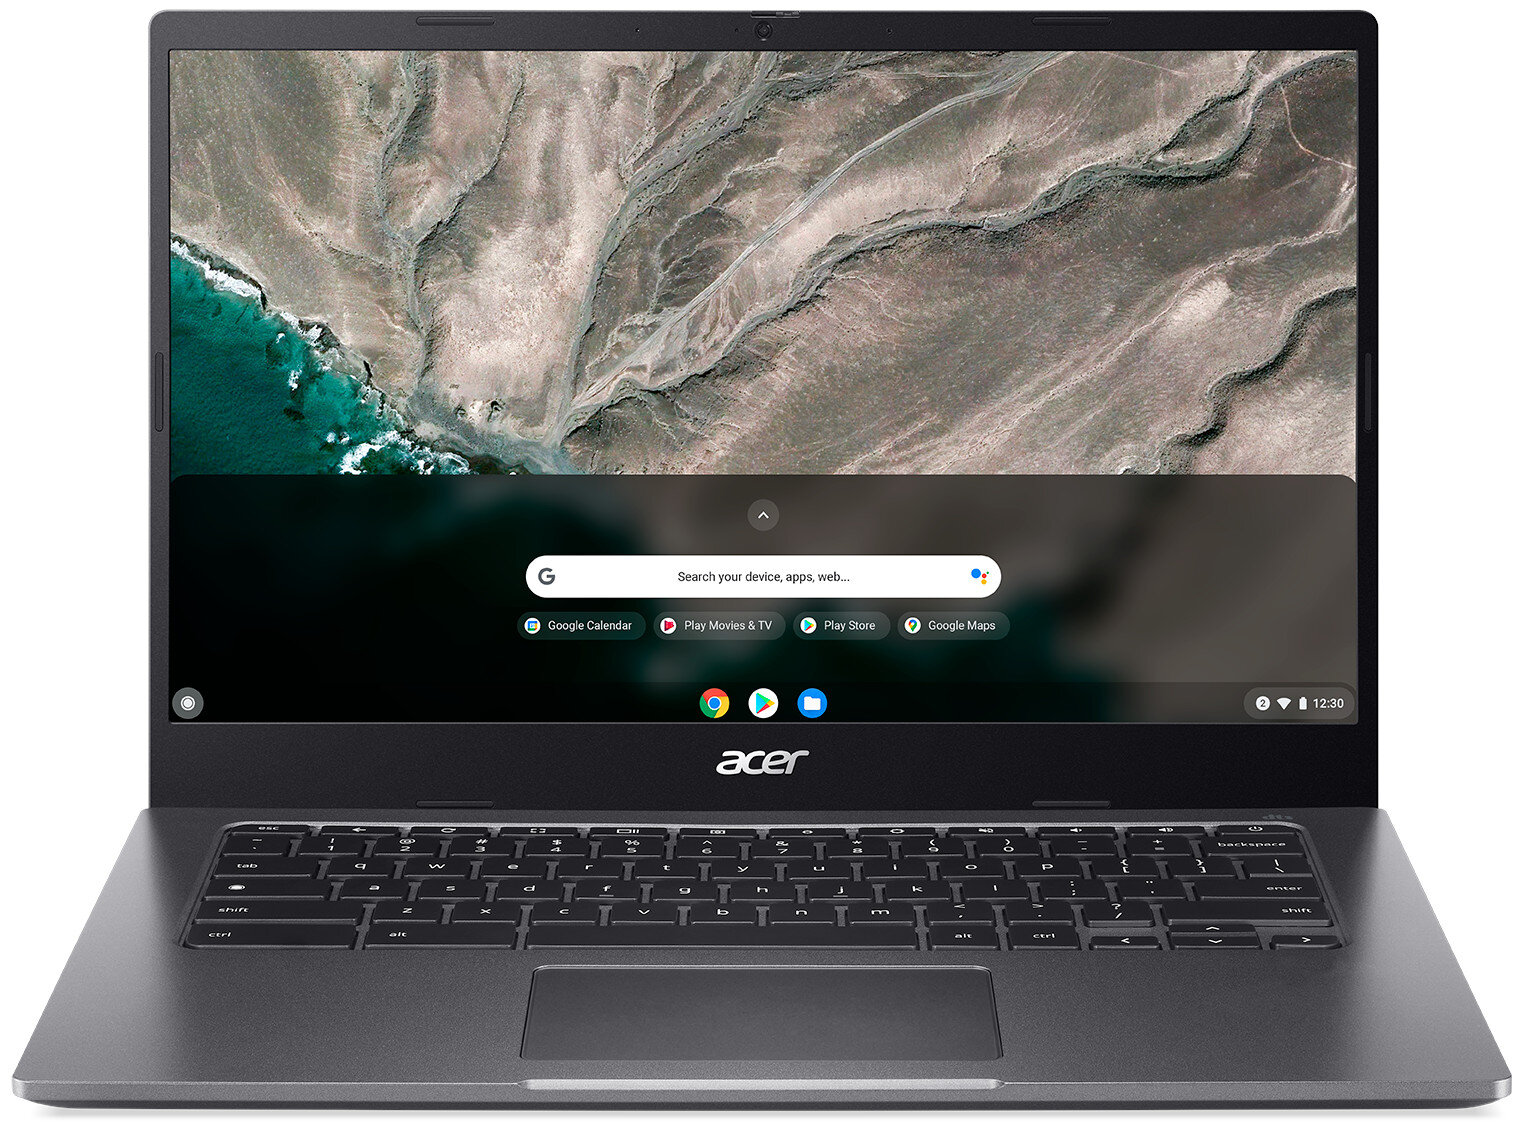 Chromebook Plus Acer 514 CB514 3HT R0CT 14 Ecran tactile AMD